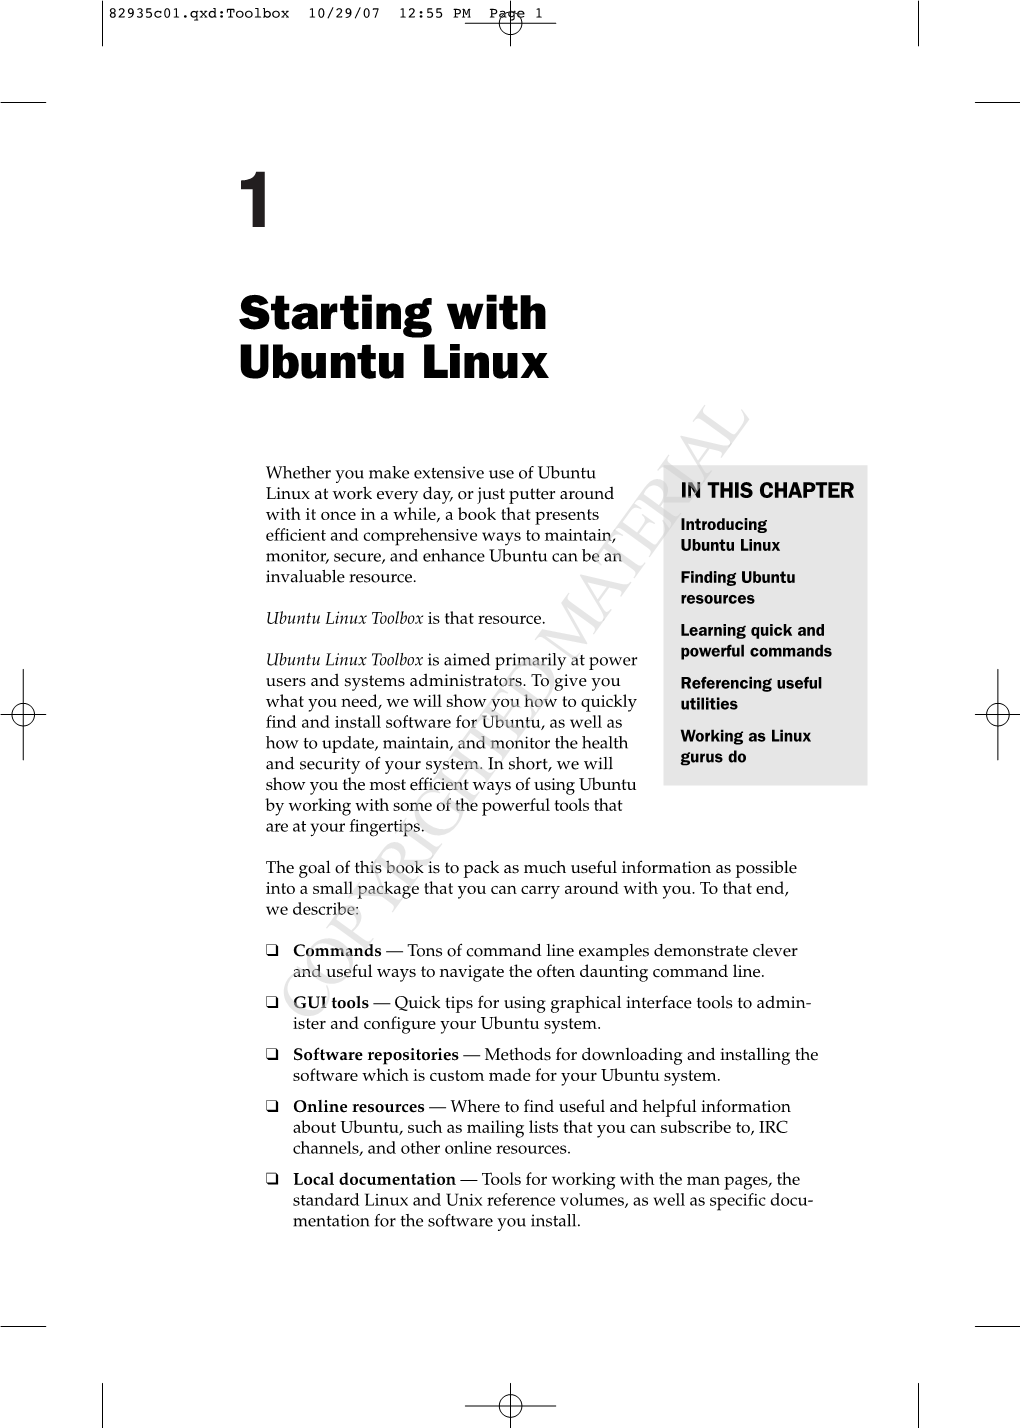 Starting with Ubuntu Linux